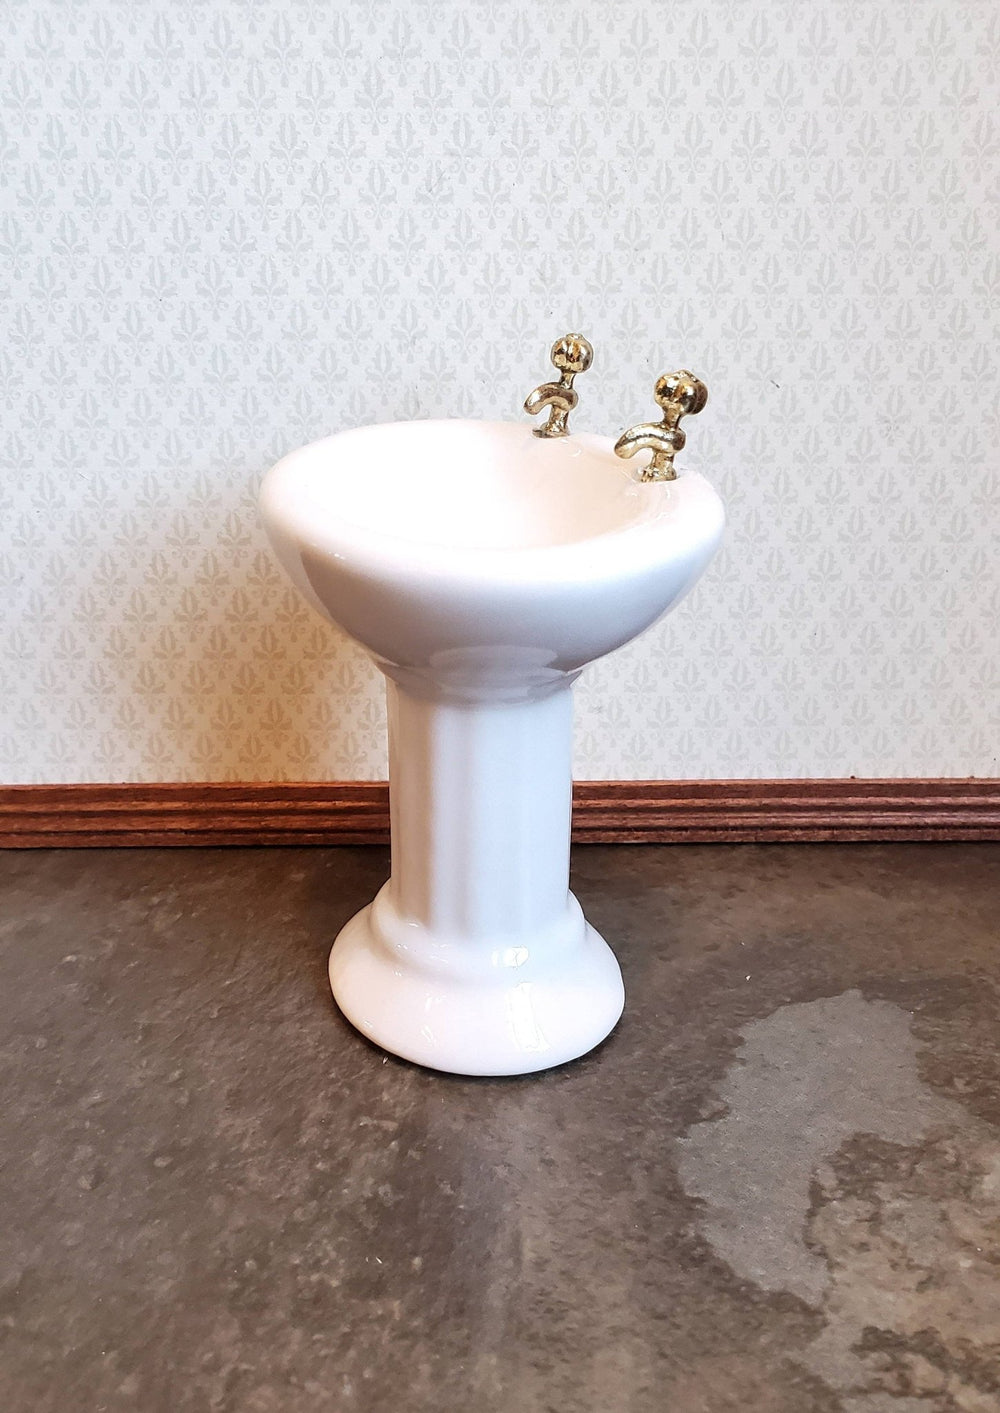 Dollhouse Miniature Pedestal Sink Bathroom White Ceramic Gold Handles 1:12 Scale - Miniature Crush